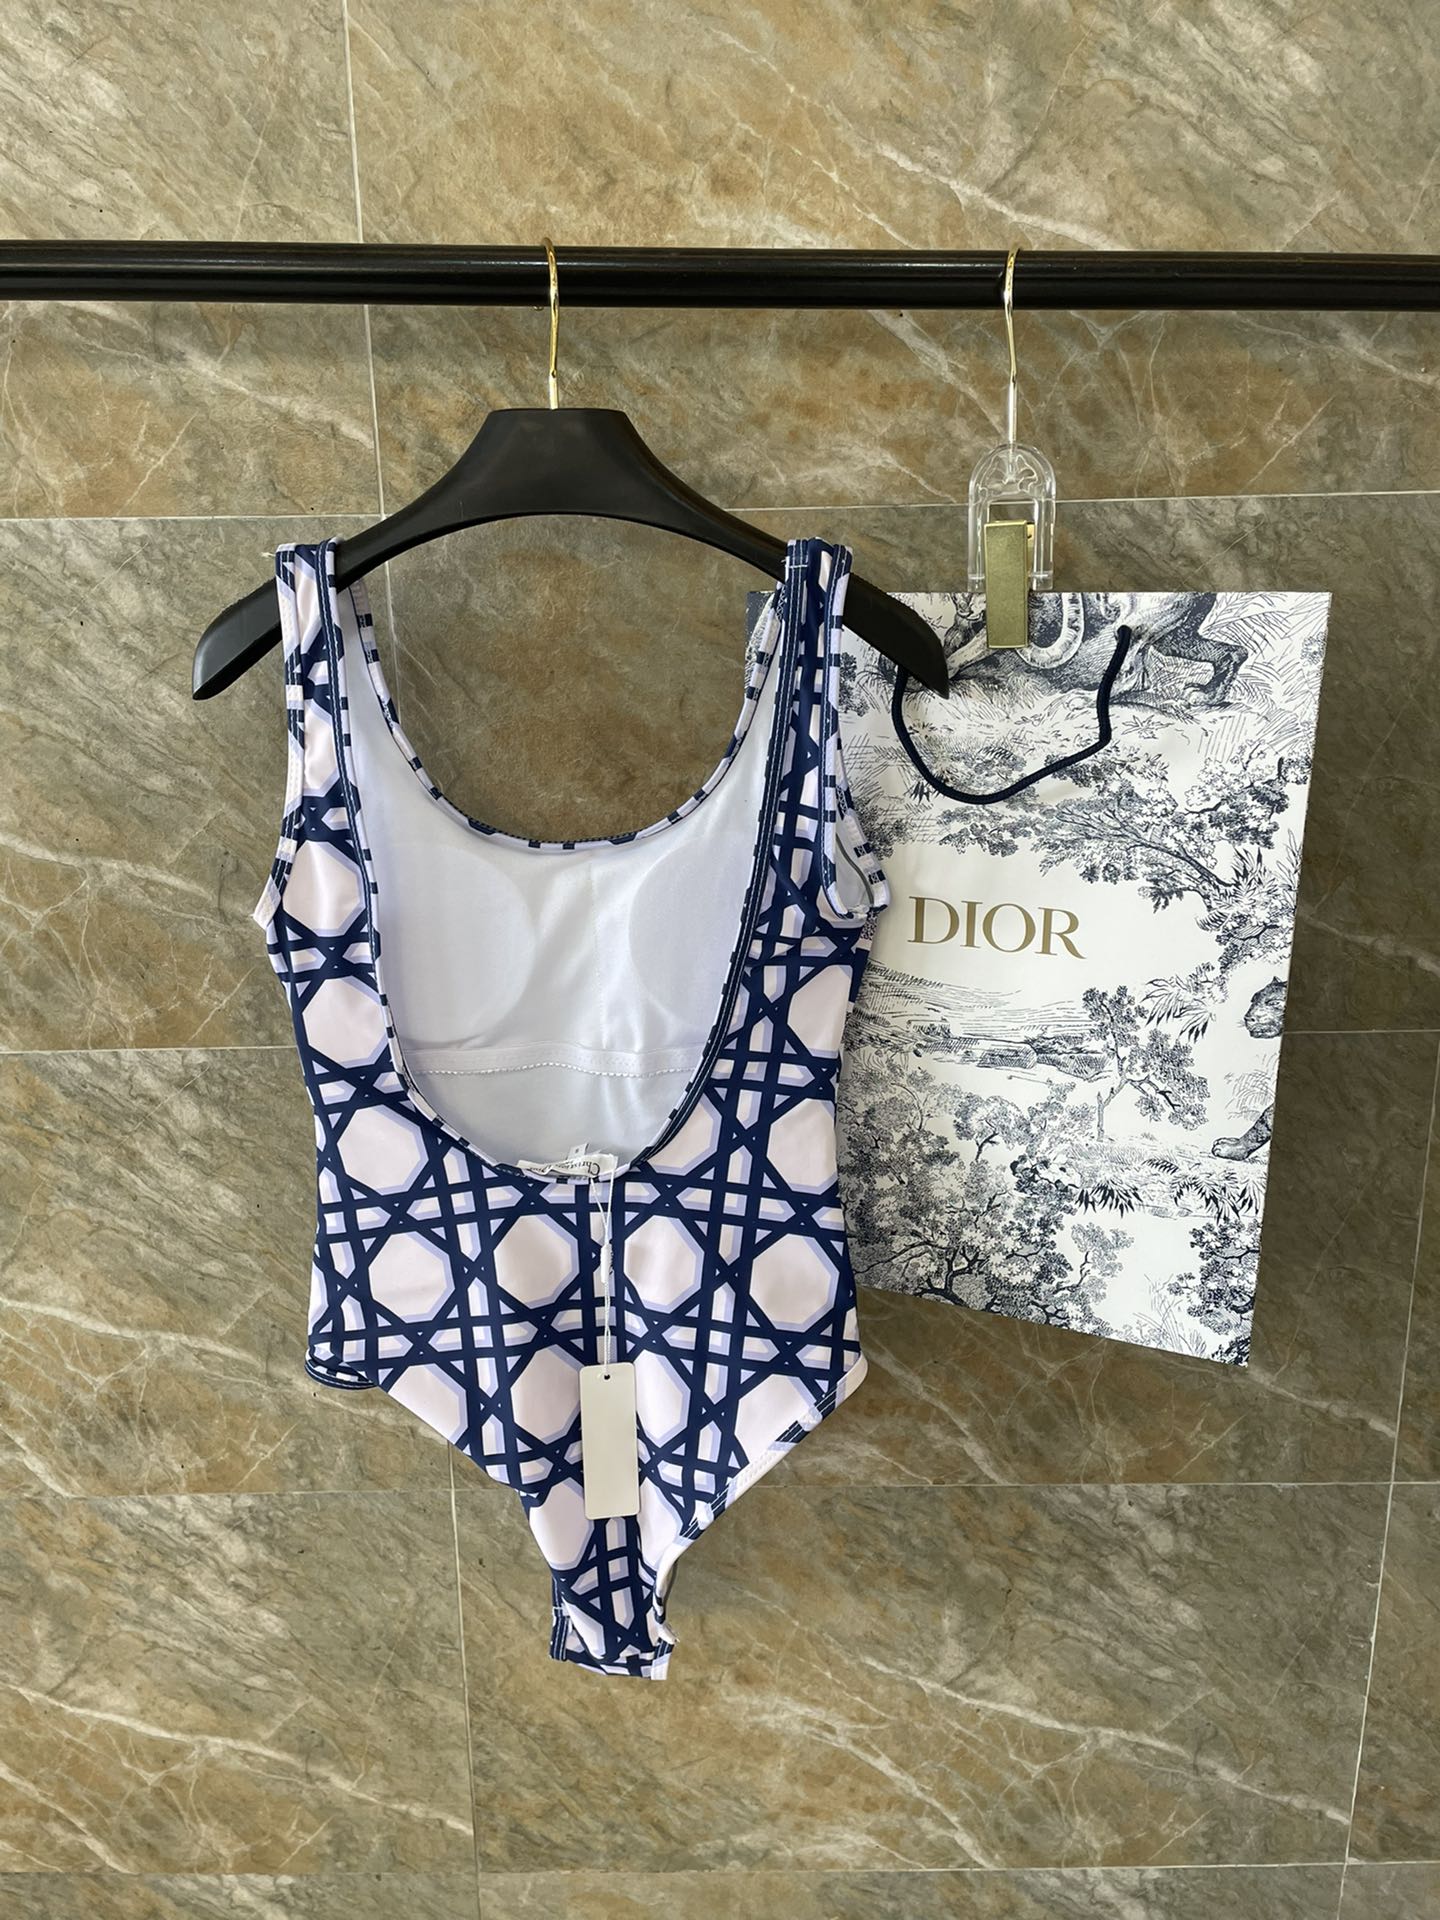 Dior比基尼适合多种场景的游泳衣️海边游泳池温泉水上乐园漂流都可以内搭也完全可以连体设计遮肉显高挑腹部